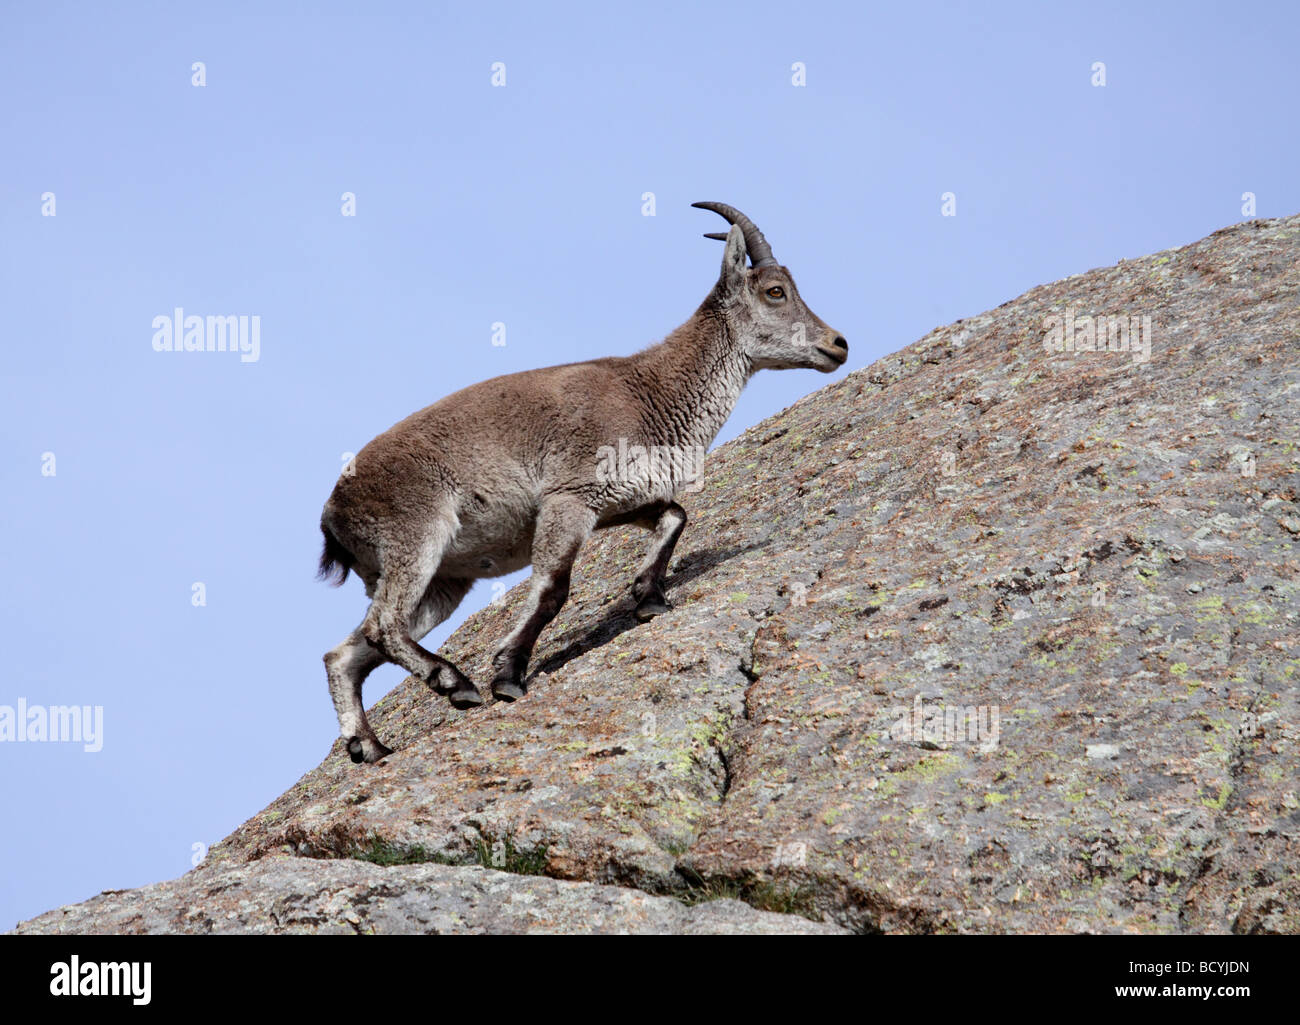 Spanish Ibex, Capra pyrenaica, Sierra de Gredos, Spain Stock Photo